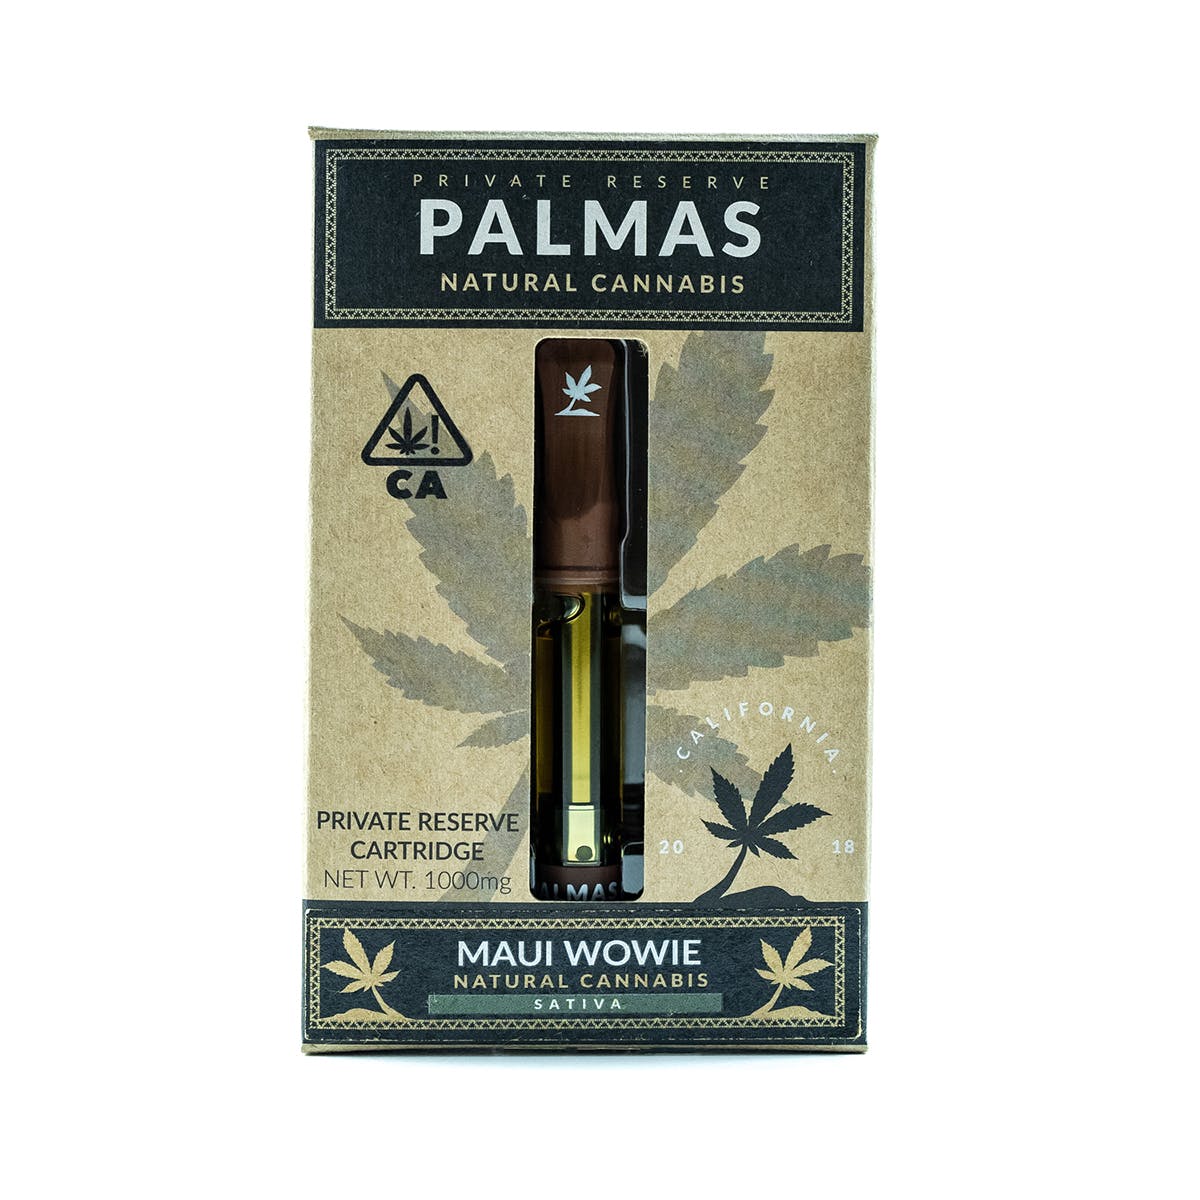 concentrate-palmas-cannabis-palmas-private-reserve-cartridge-maui-wowie